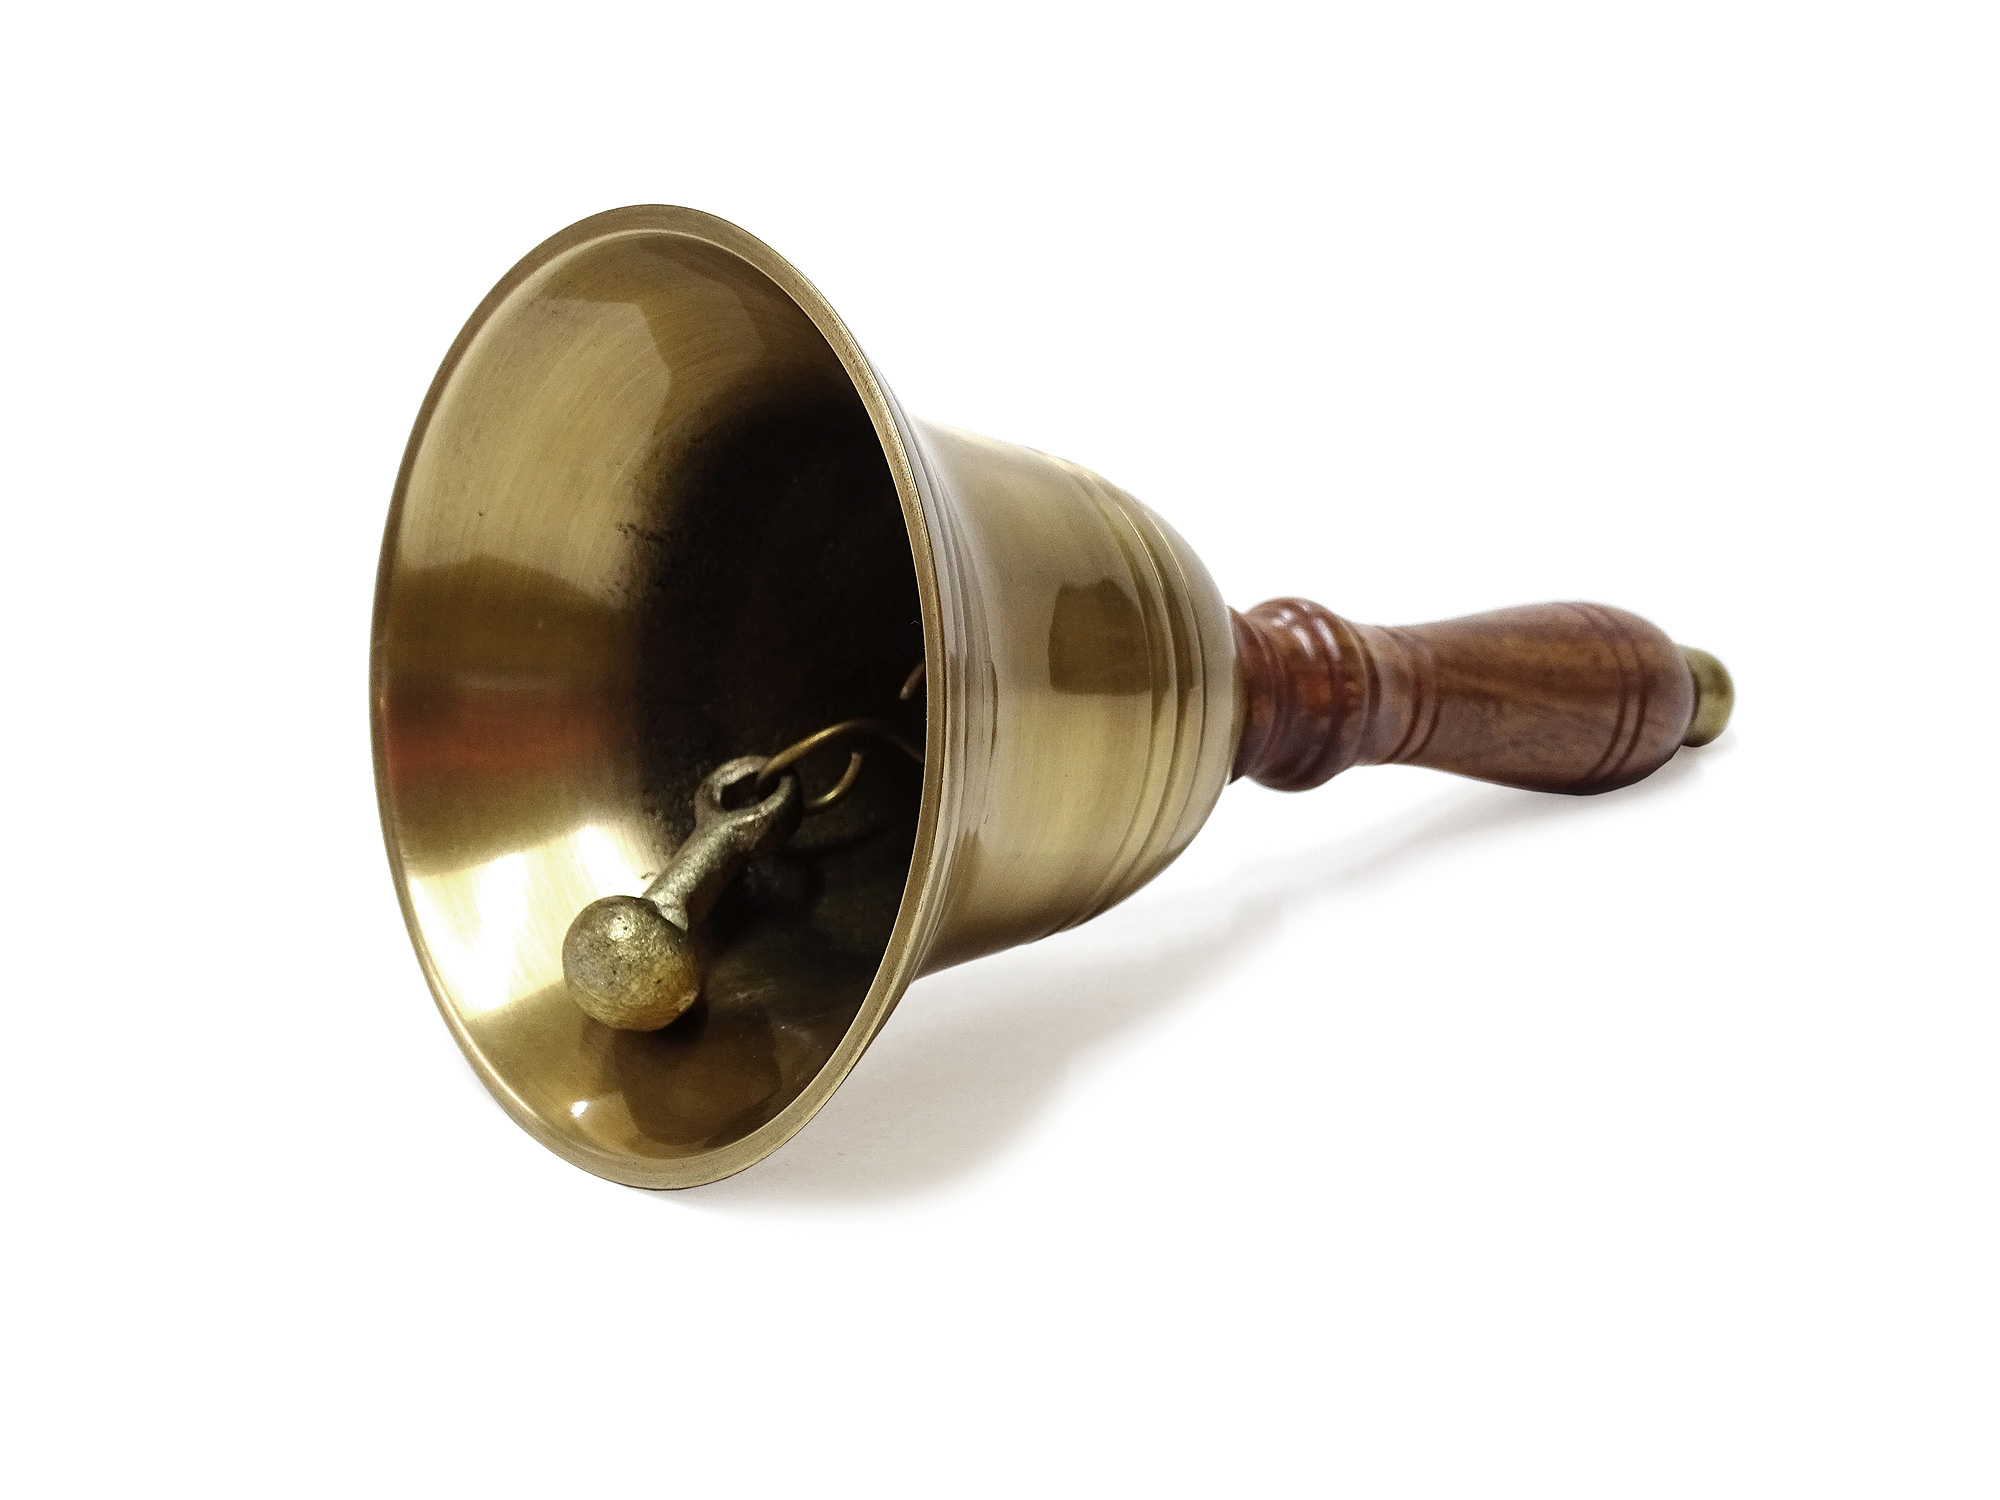 27,5 cm Tischglocke Handglocke Messing Holz Captains Bell Glocke 